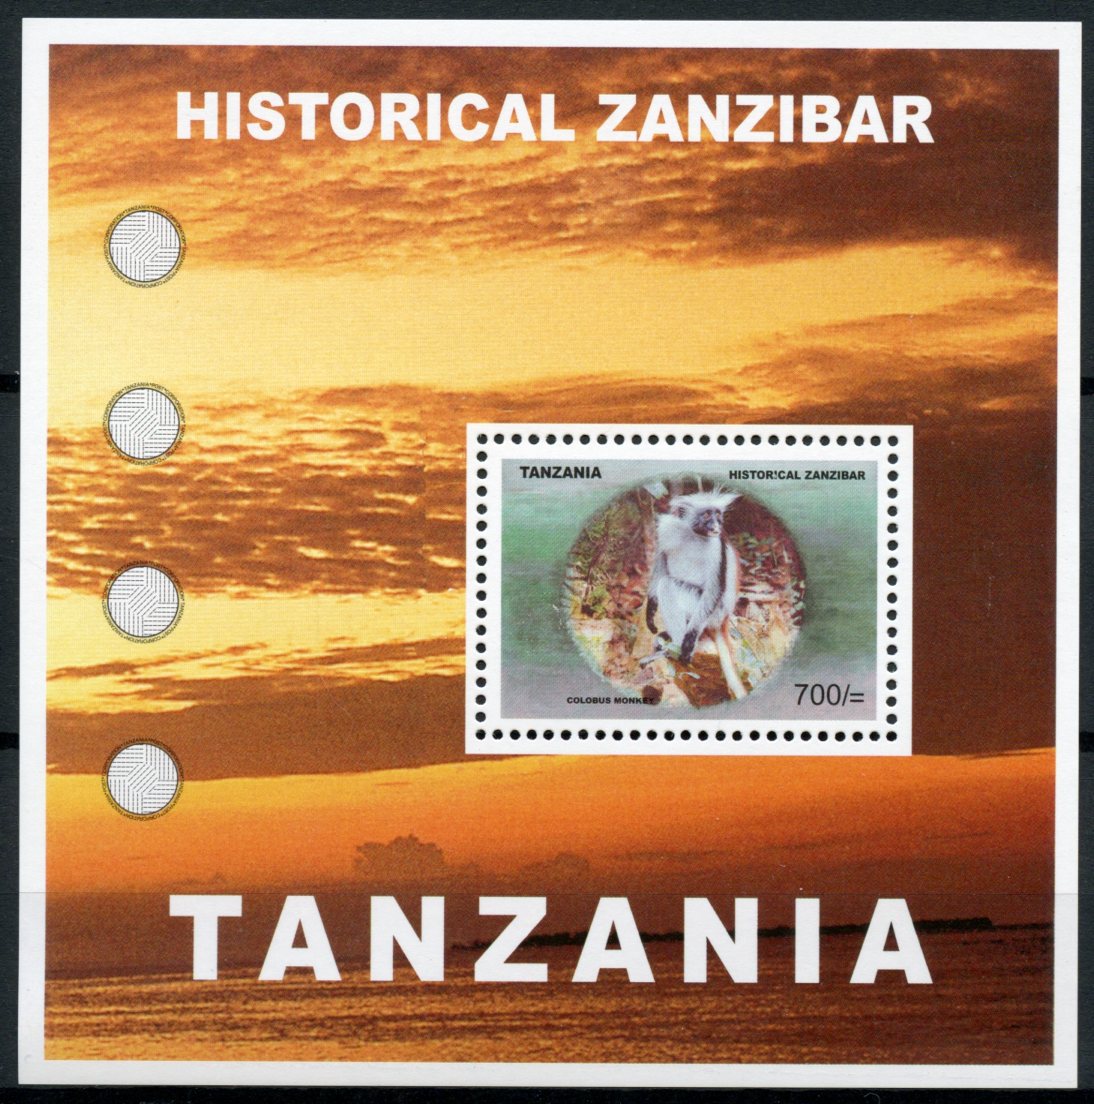 Tanzania Wild Animals Stamps 2007 MNH Historical Zanzibar Colobus Monkey 1v S/S